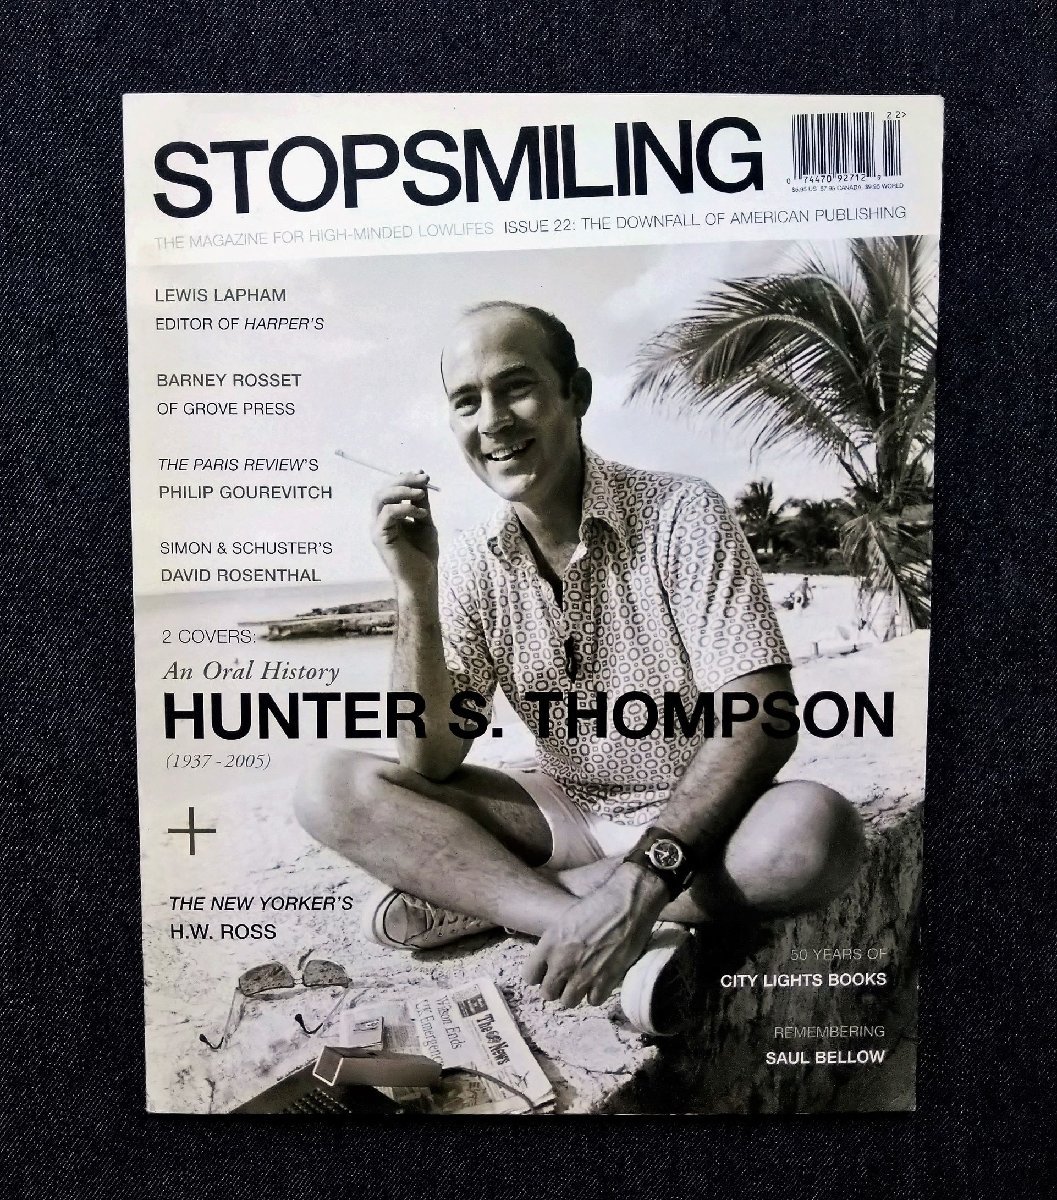  Hunter *S* ton pson.. number Stop Smiling Hunter S. Thompson GONZO Ralf * ste do man Ralph Steadman/ City laitsu50 year history 